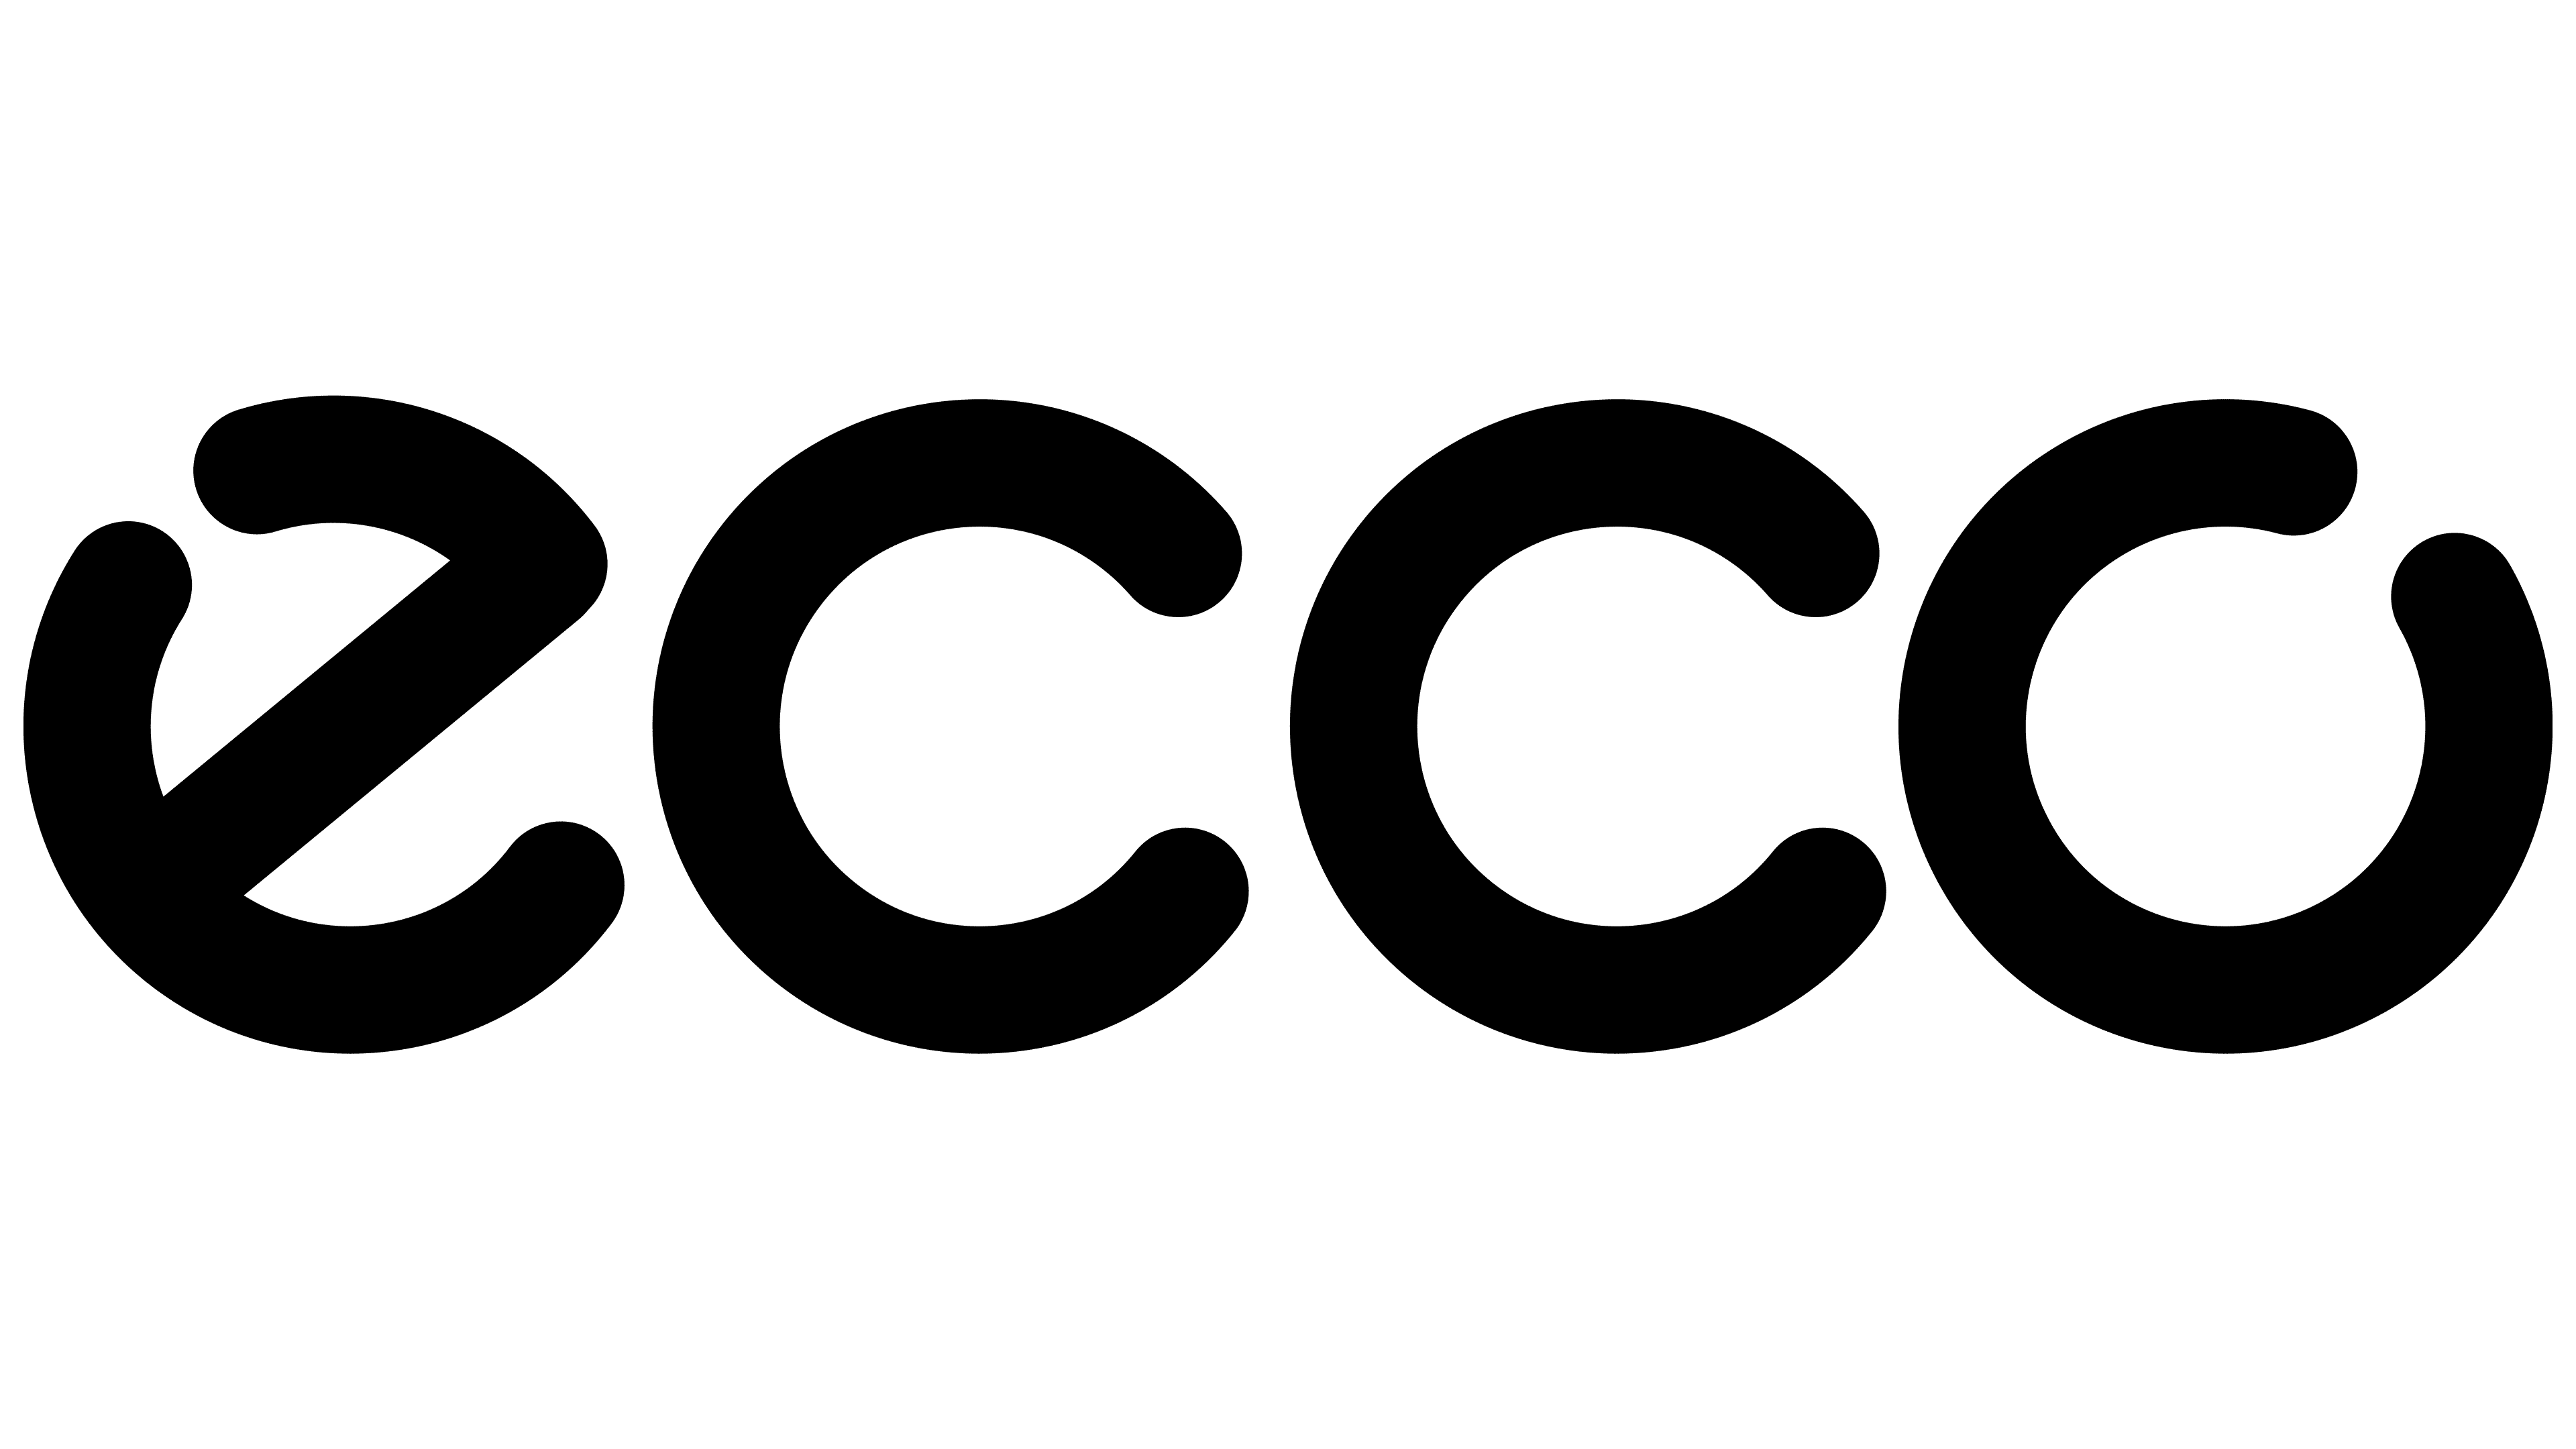 ECCO Logo, symbol, meaning, history,